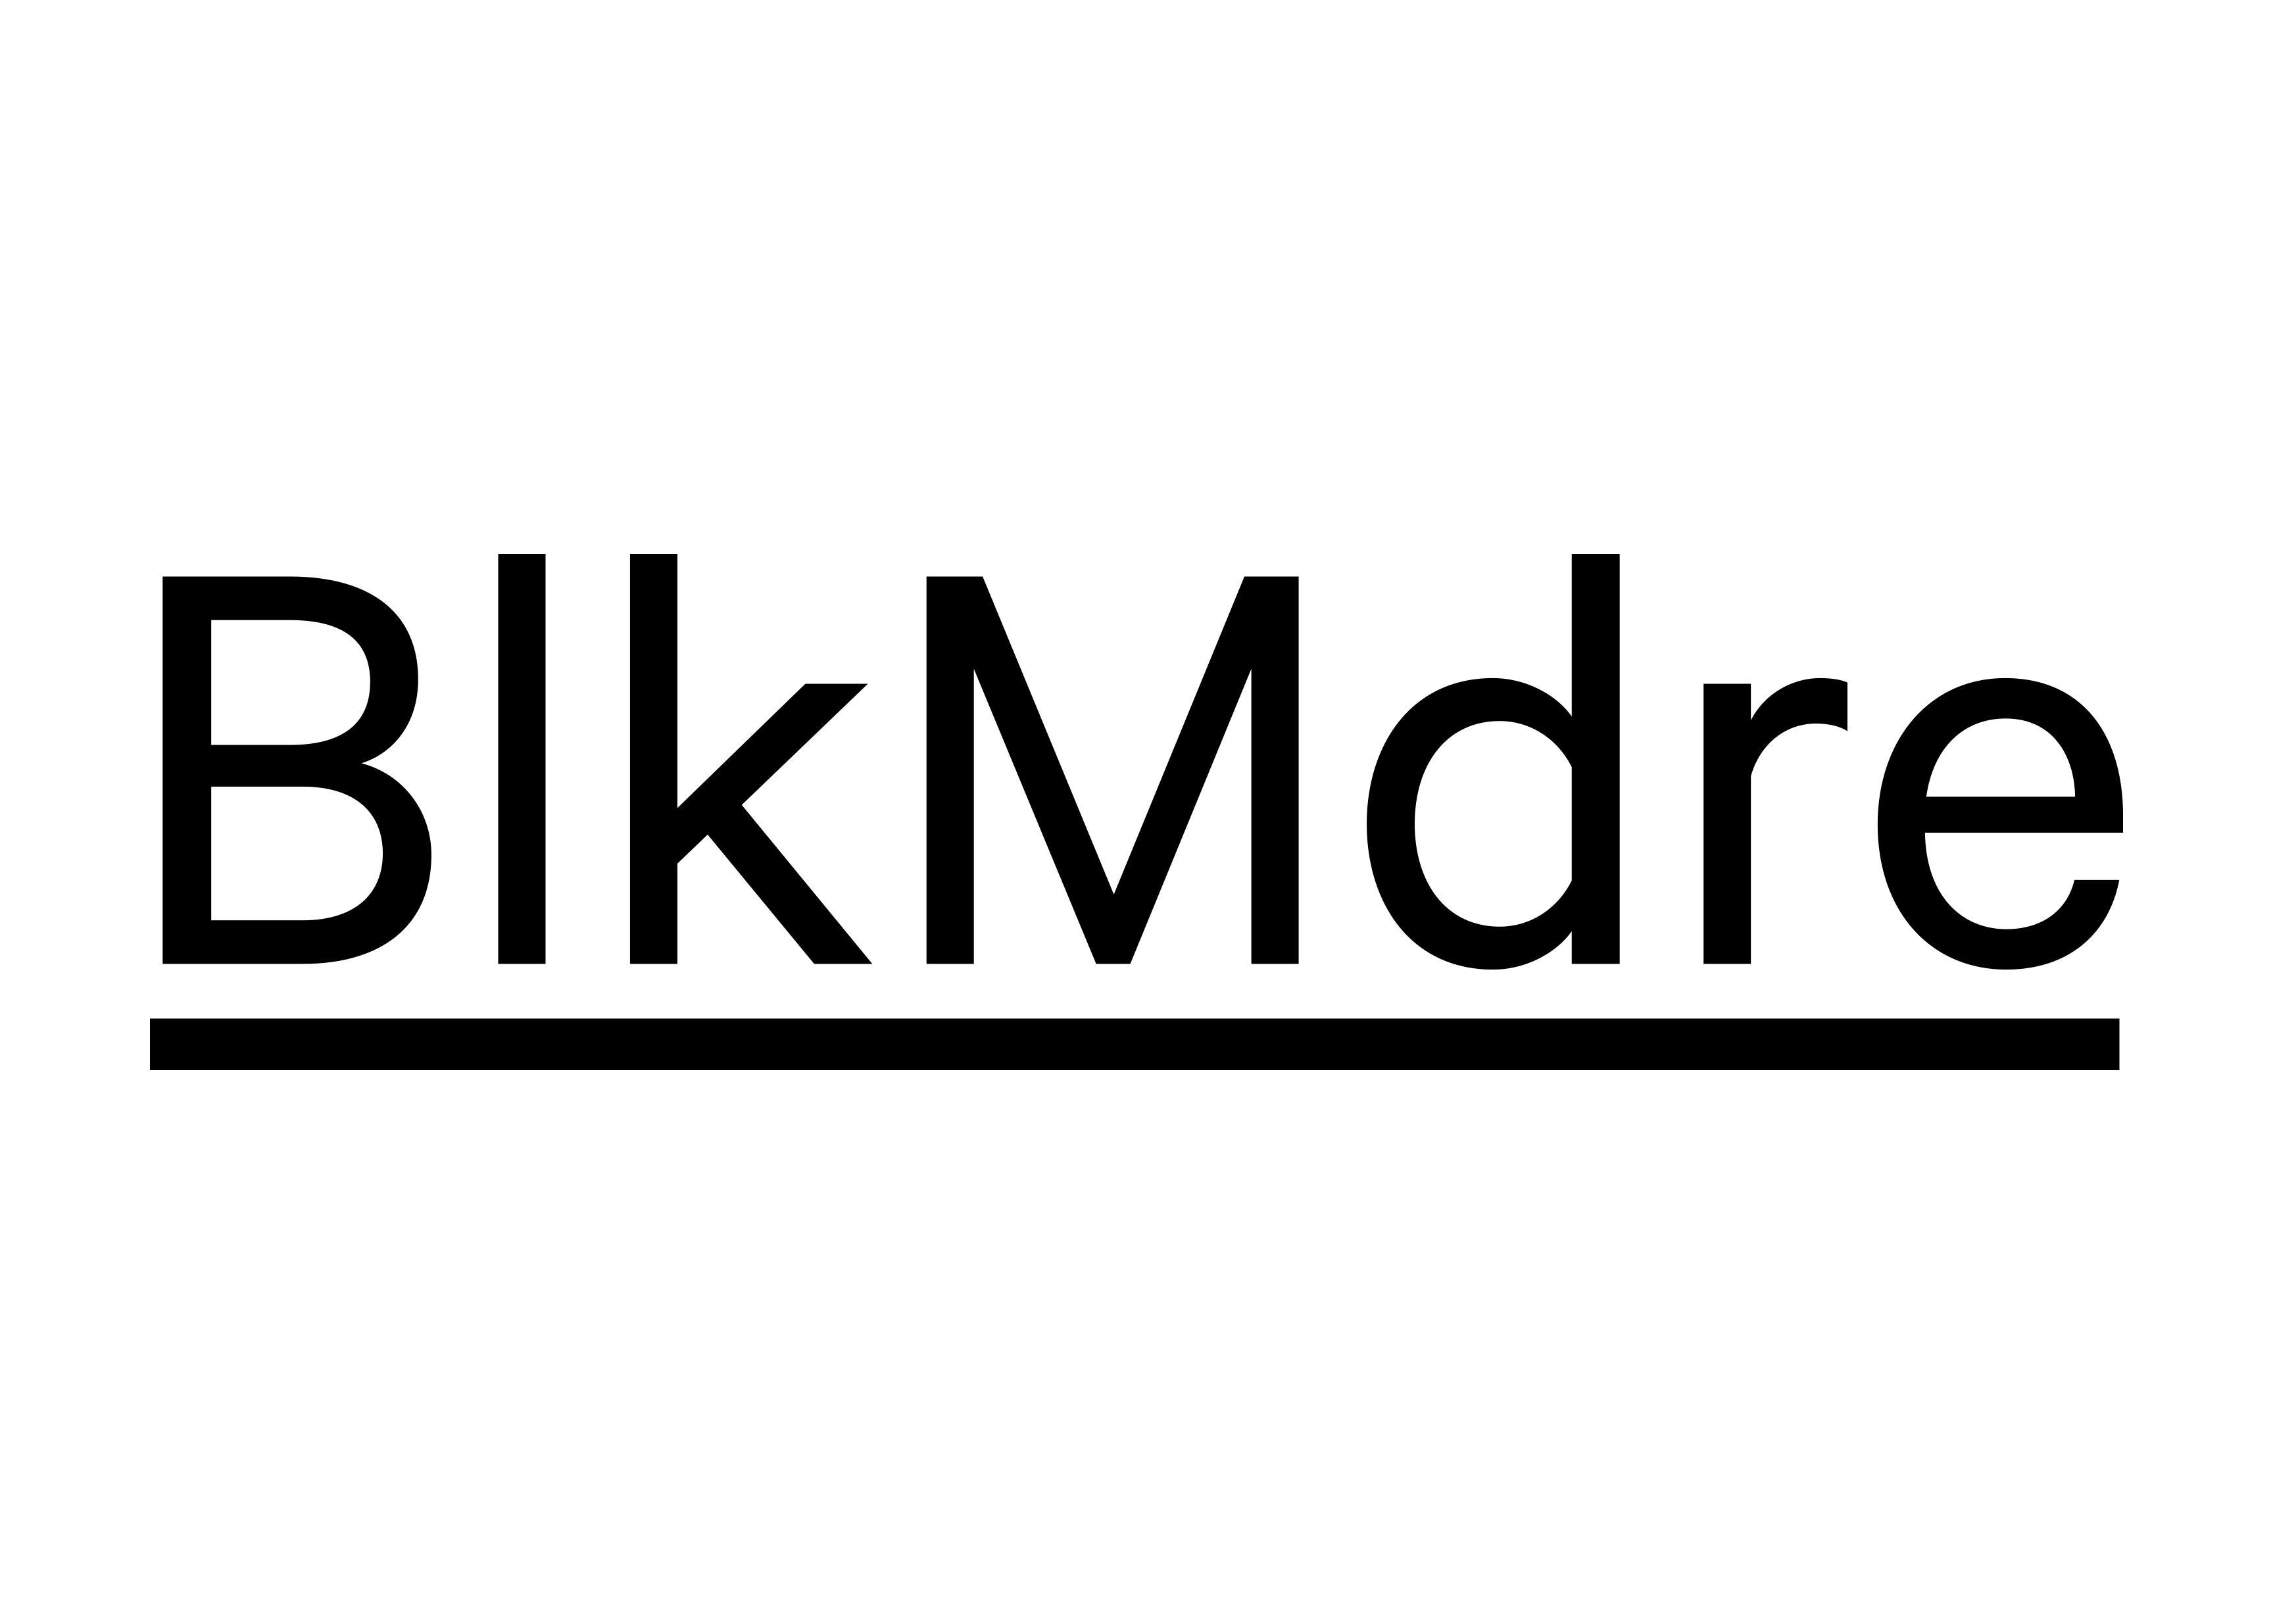 logo_BLACKMADRE_Preto_5X4